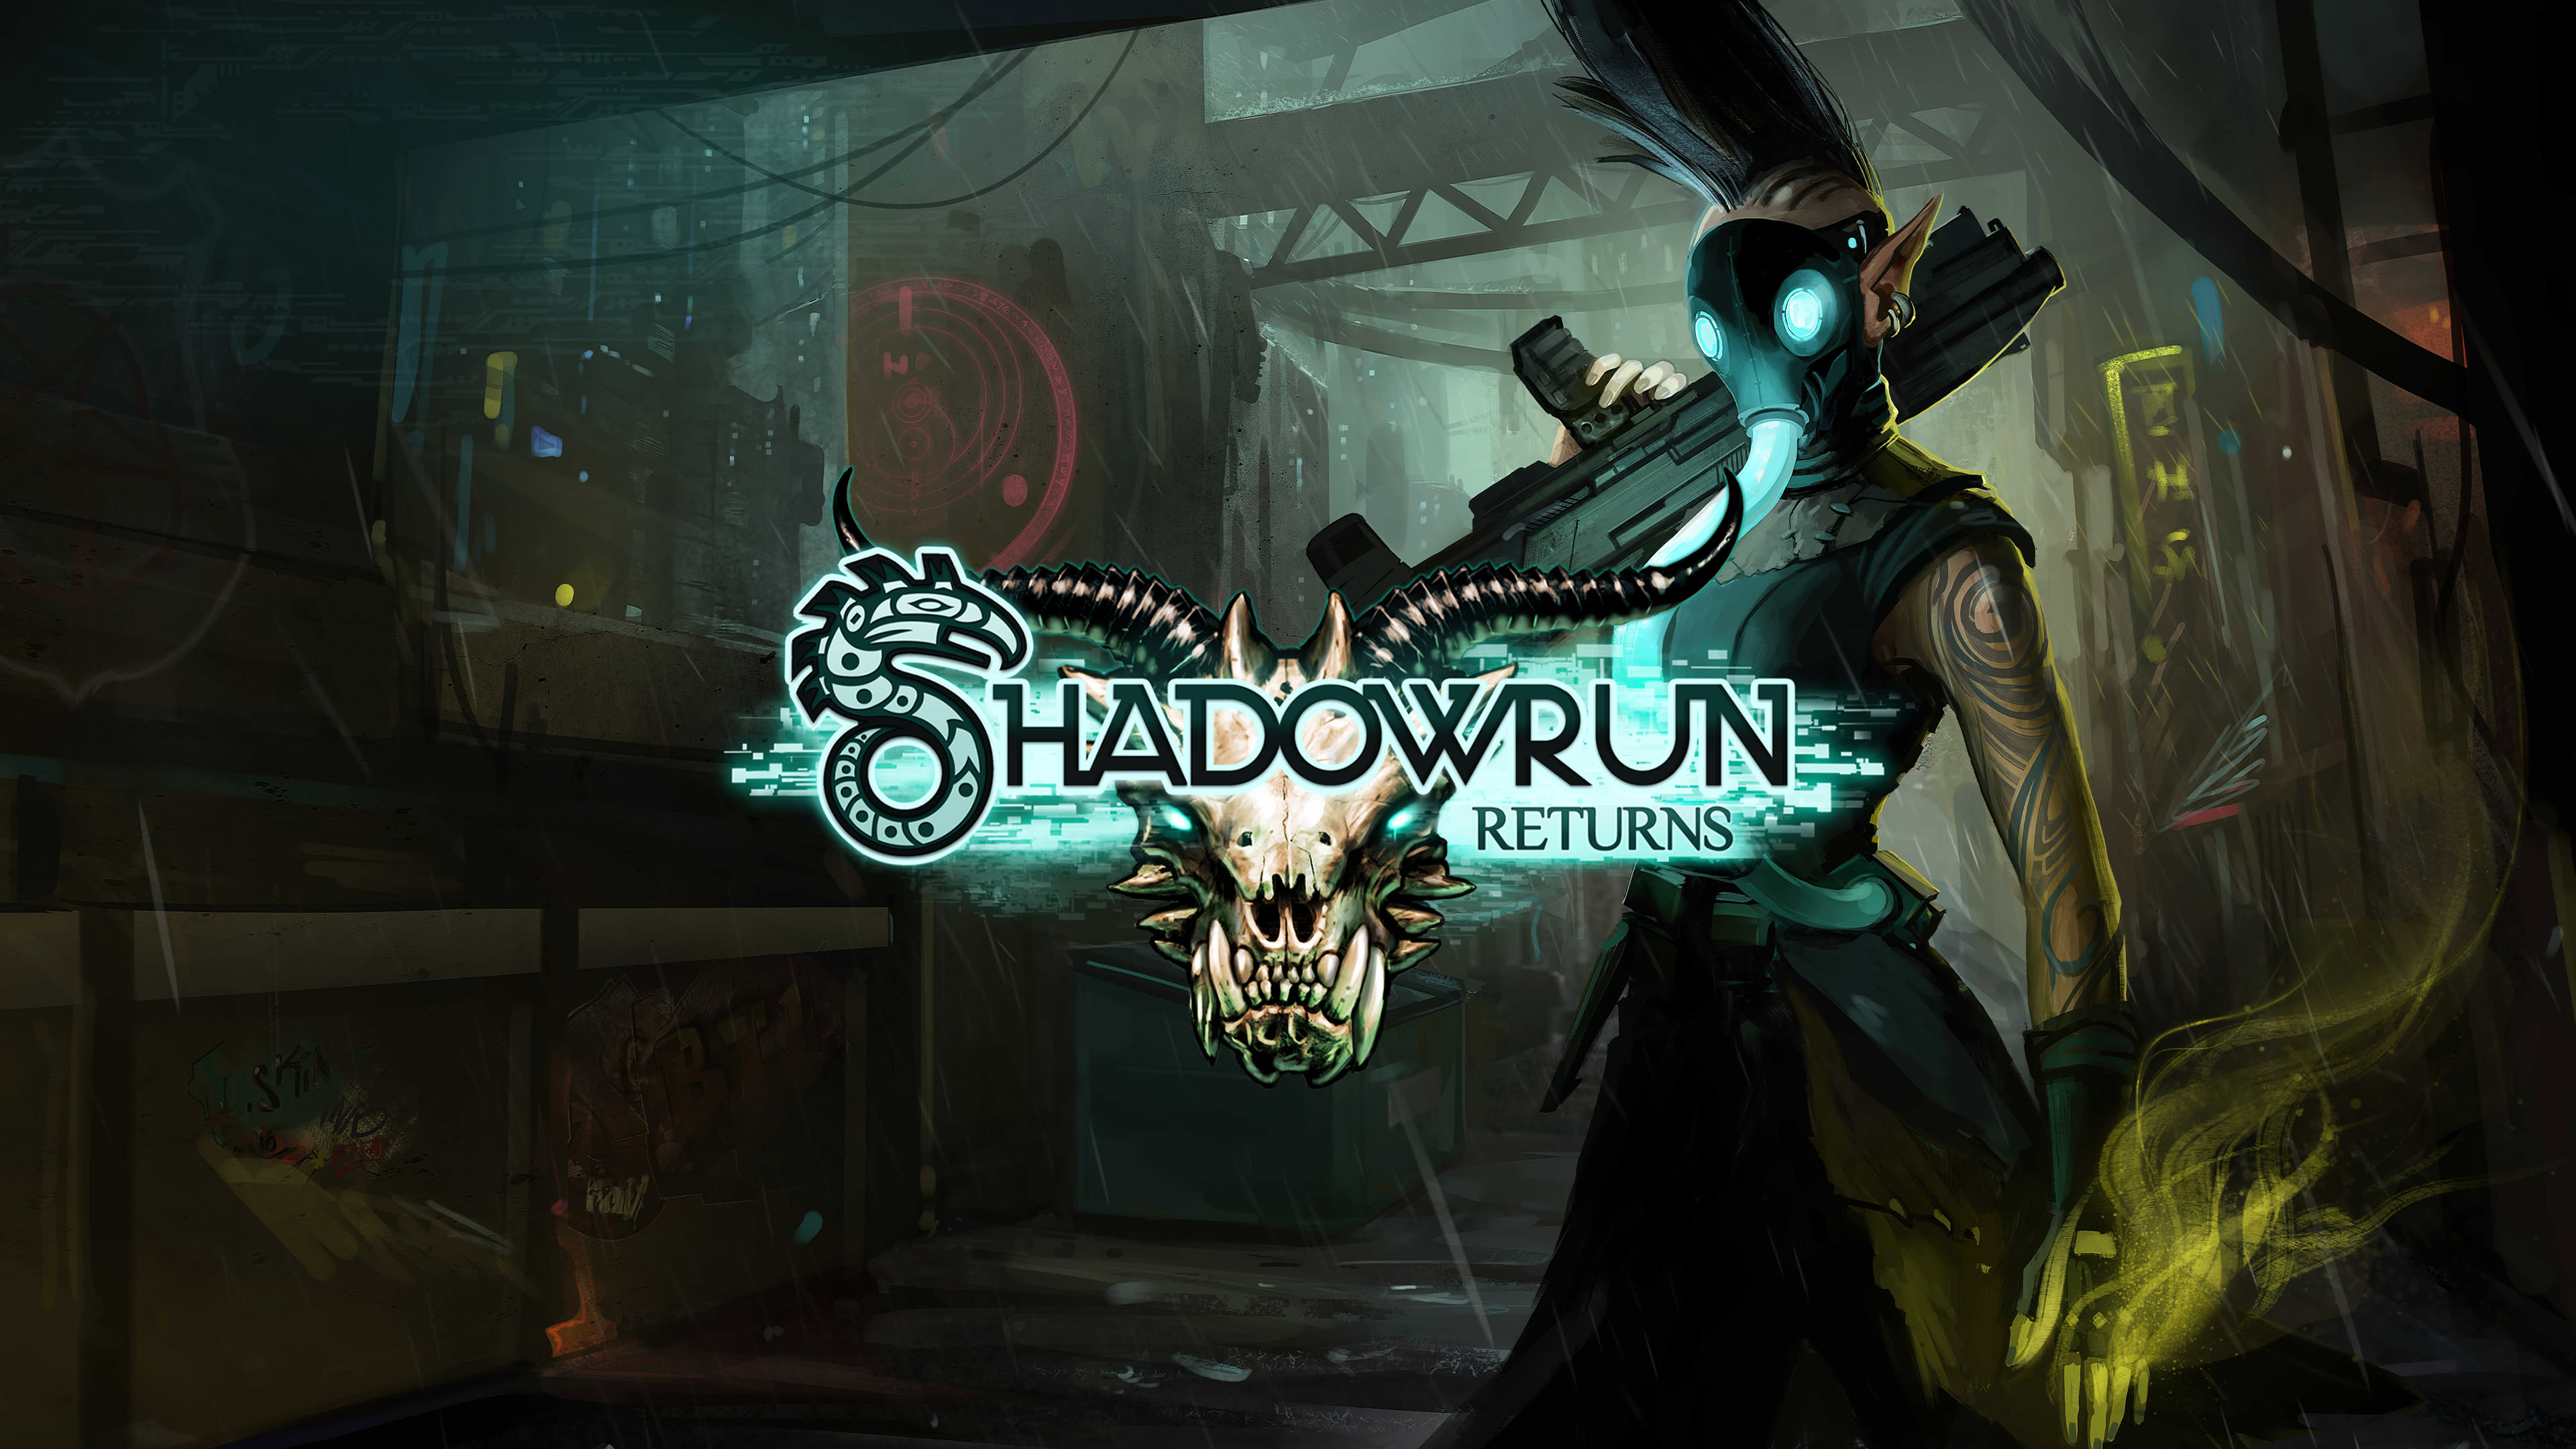 Shadowrun RPG: Kill Code